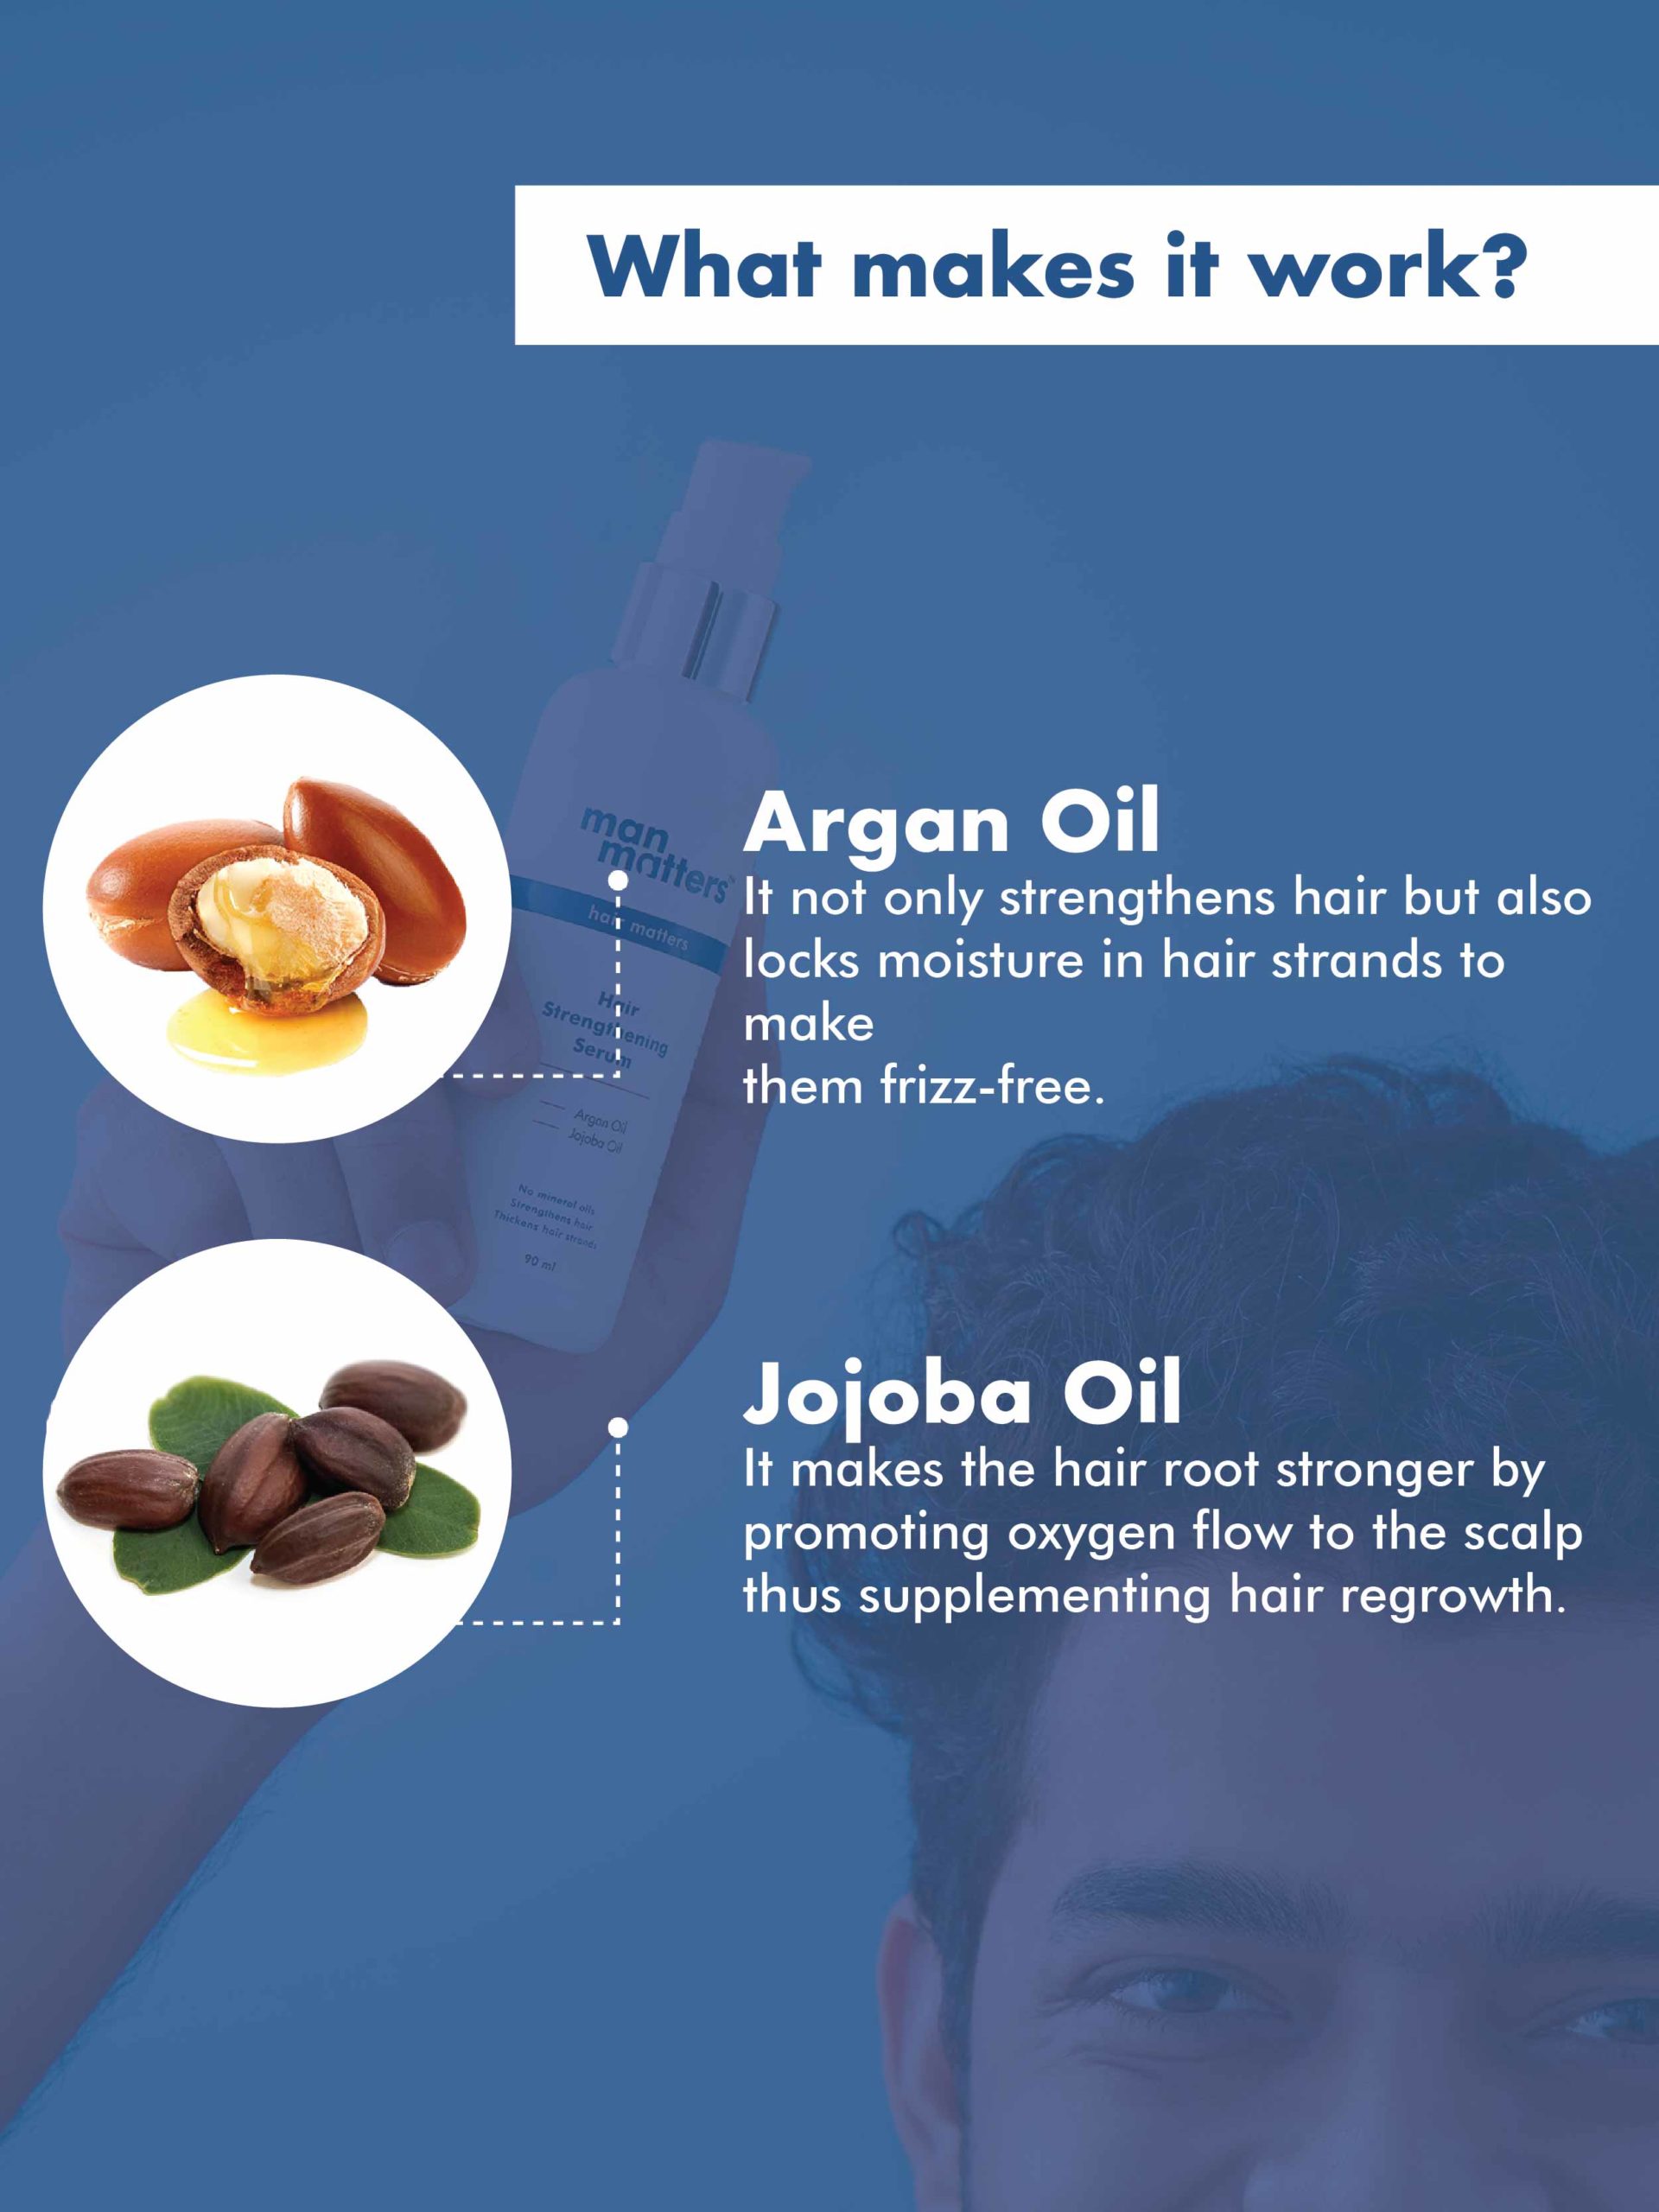 Benefits of argan oil and jojoba oil